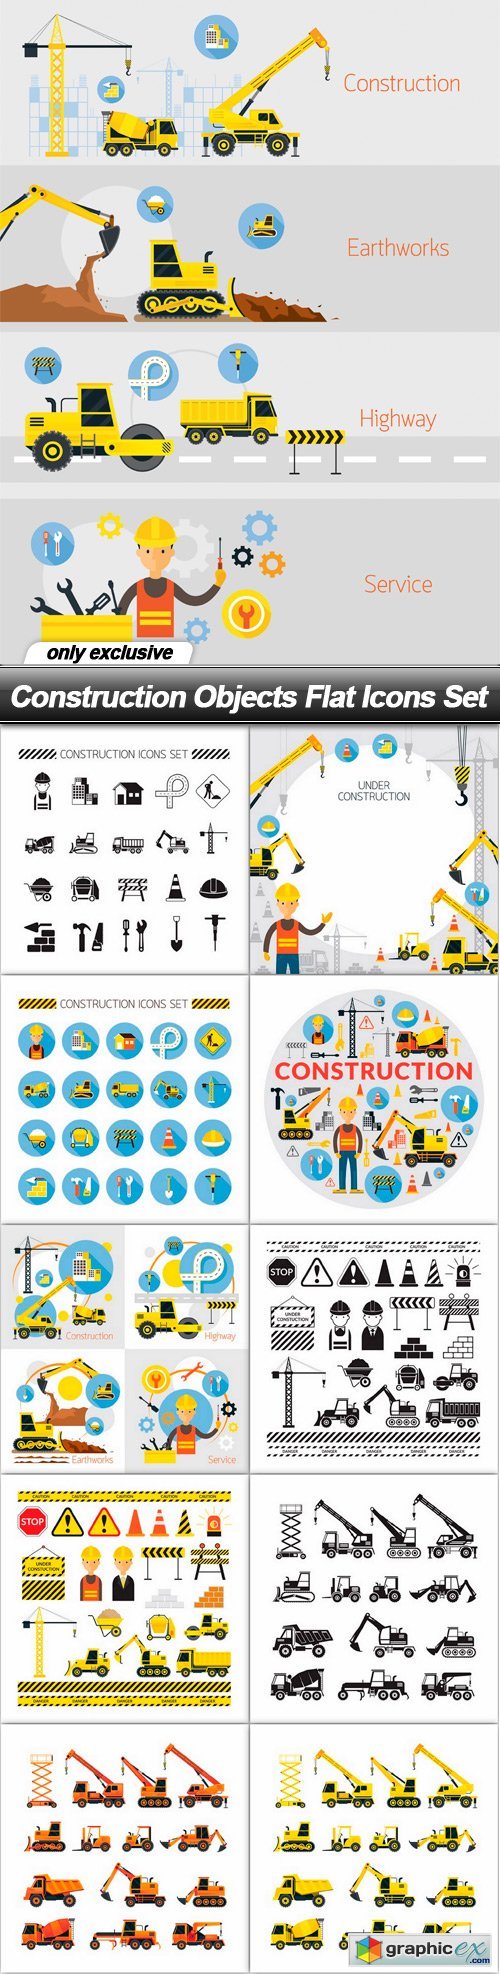 Construction Objects Flat Icons Set - 11 EPS